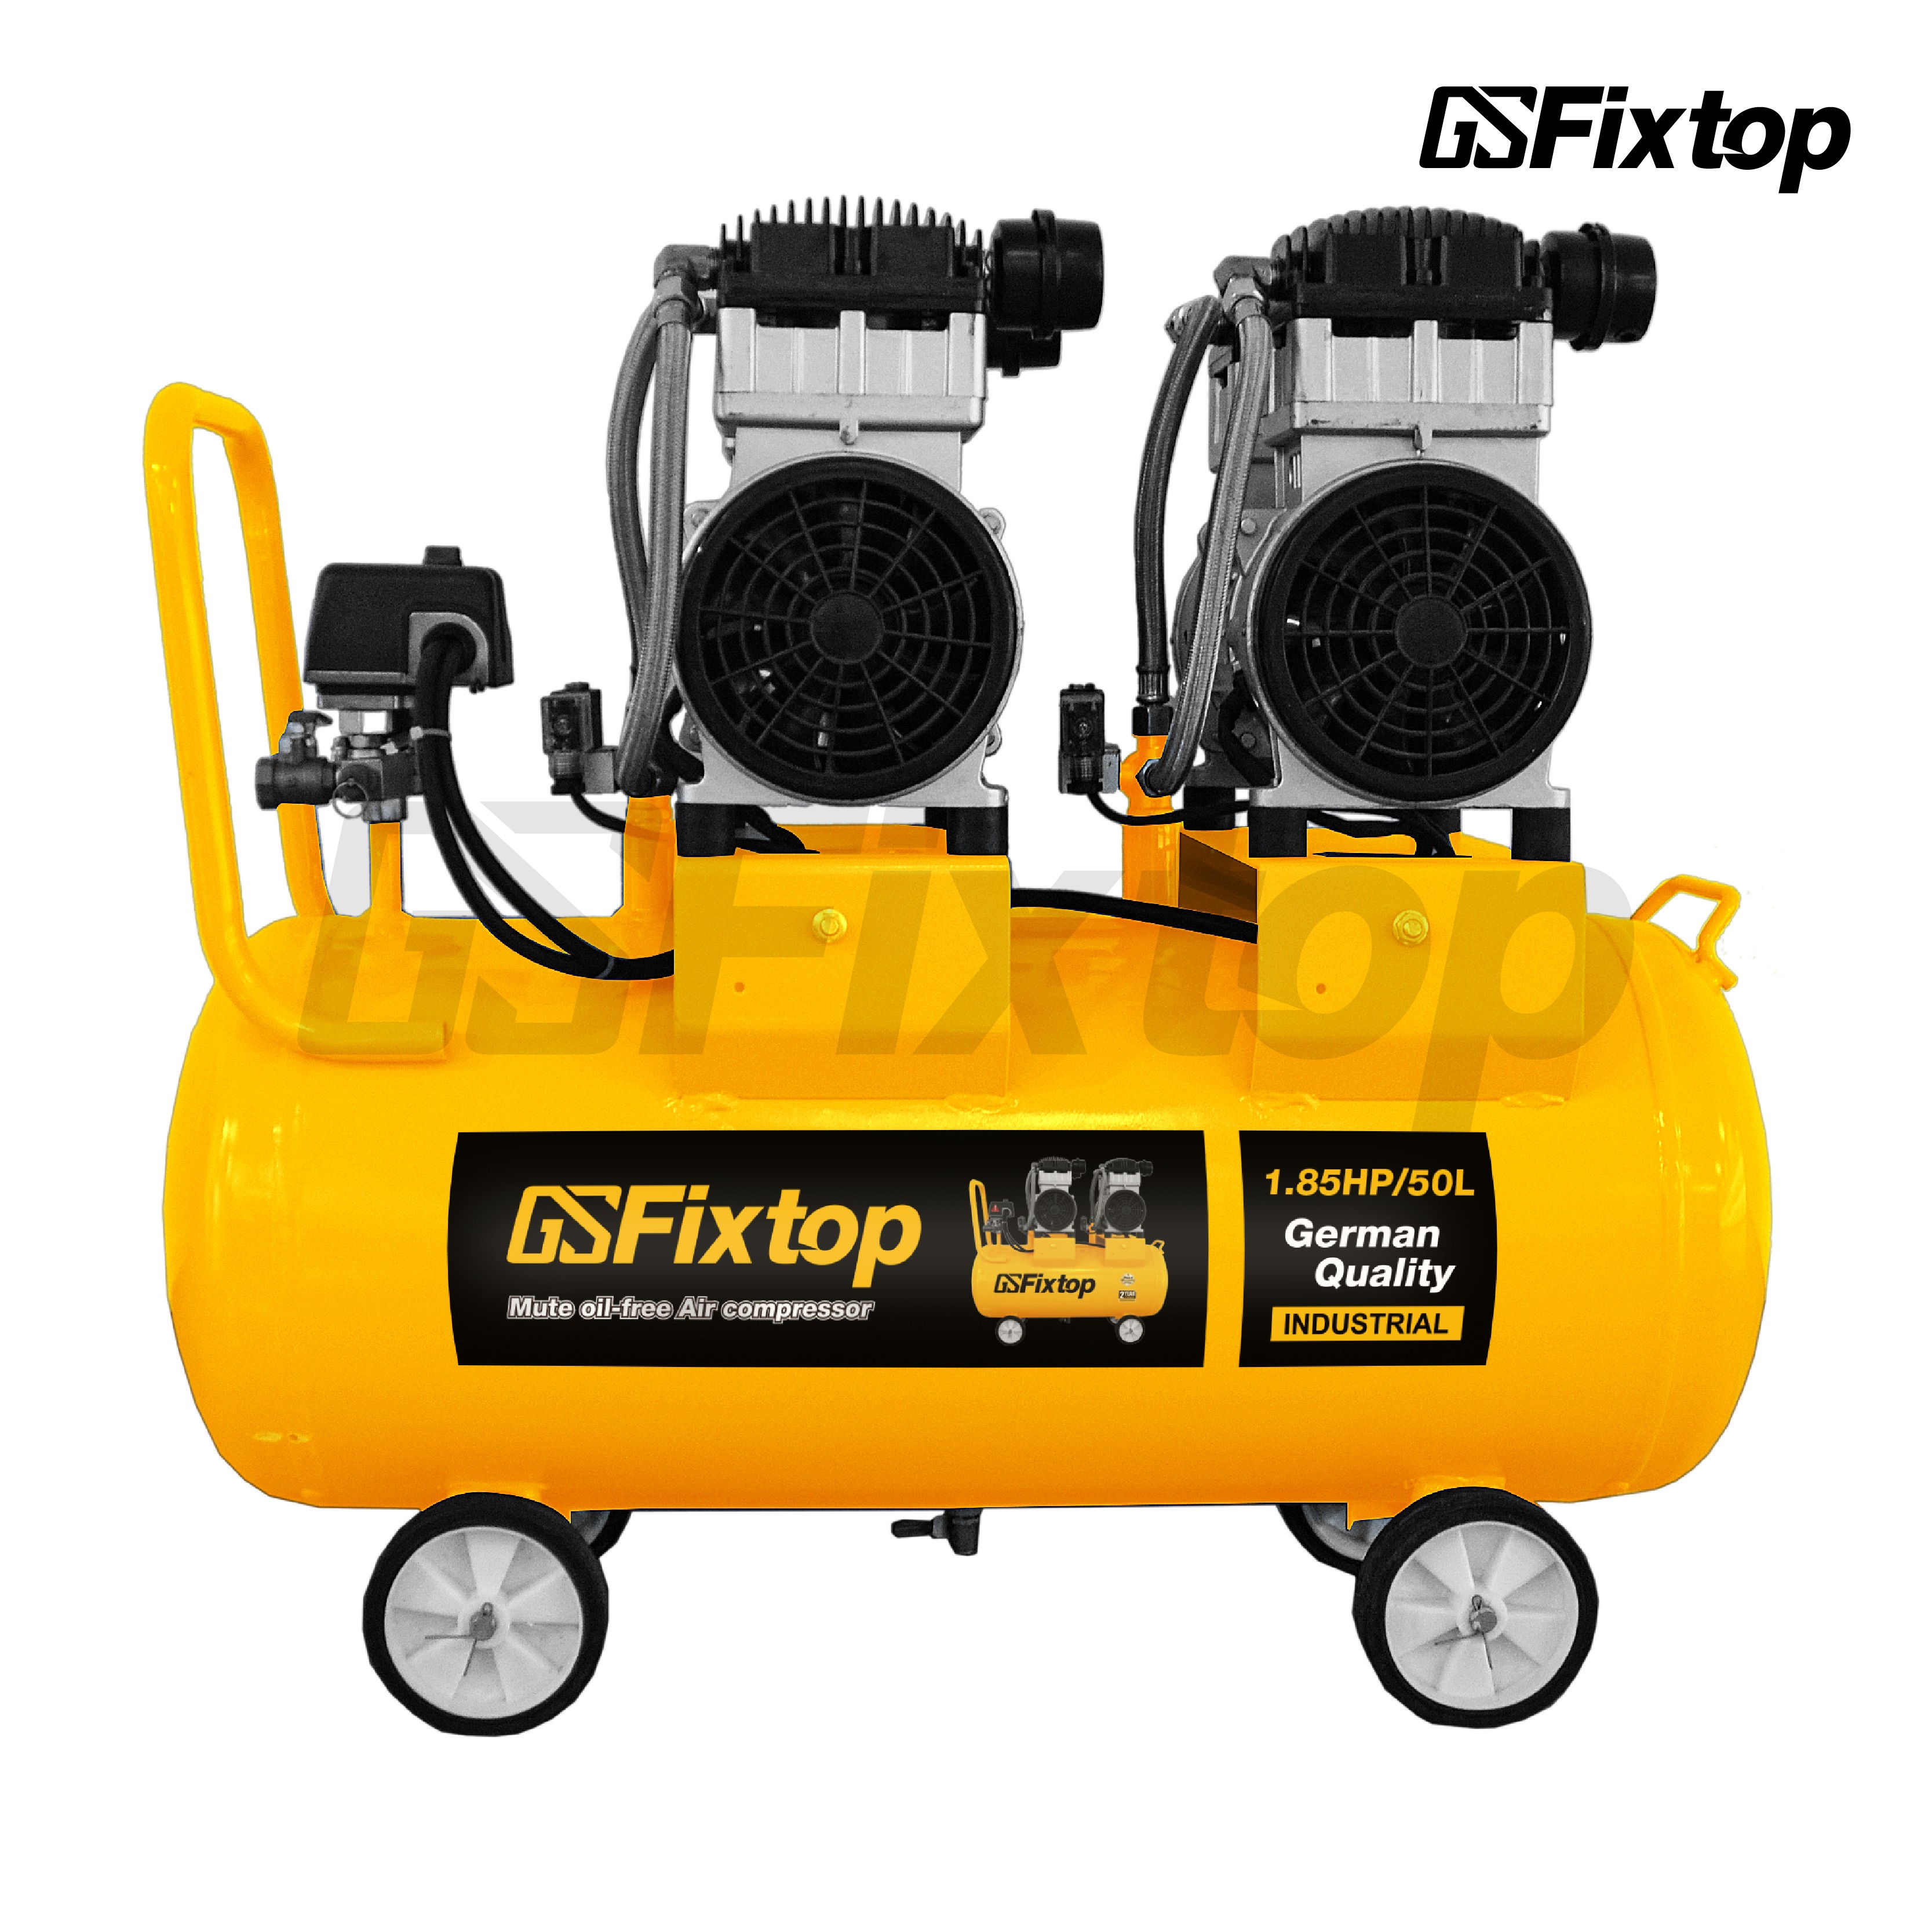 GSFixtop工具70L静音无油空气压缩机Mute oil-freeAir compressor详情图1